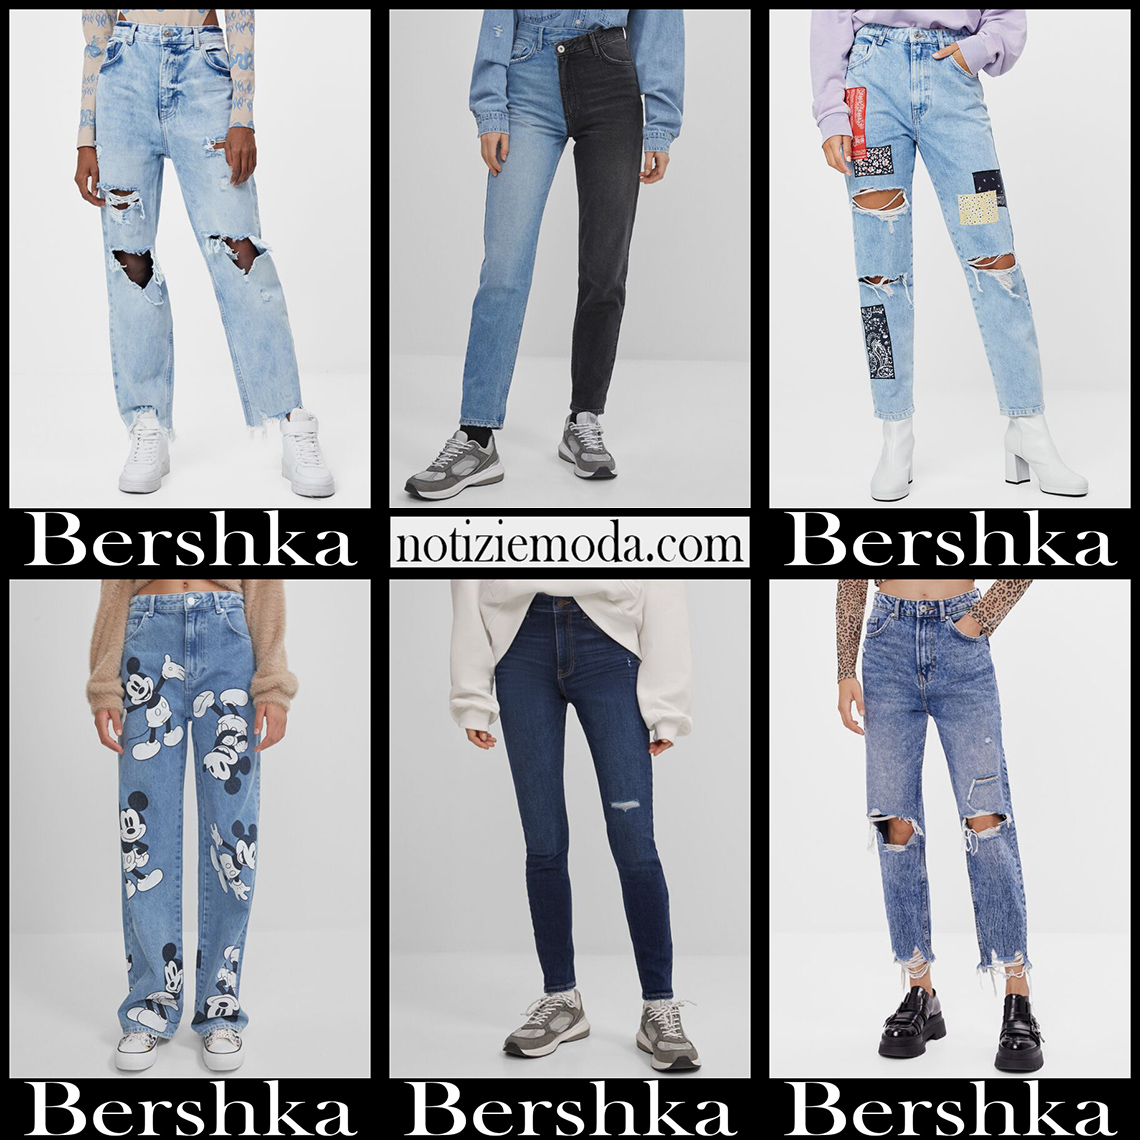 Nuovi arrivi jeans Bershka 2021 abbigliamento donna